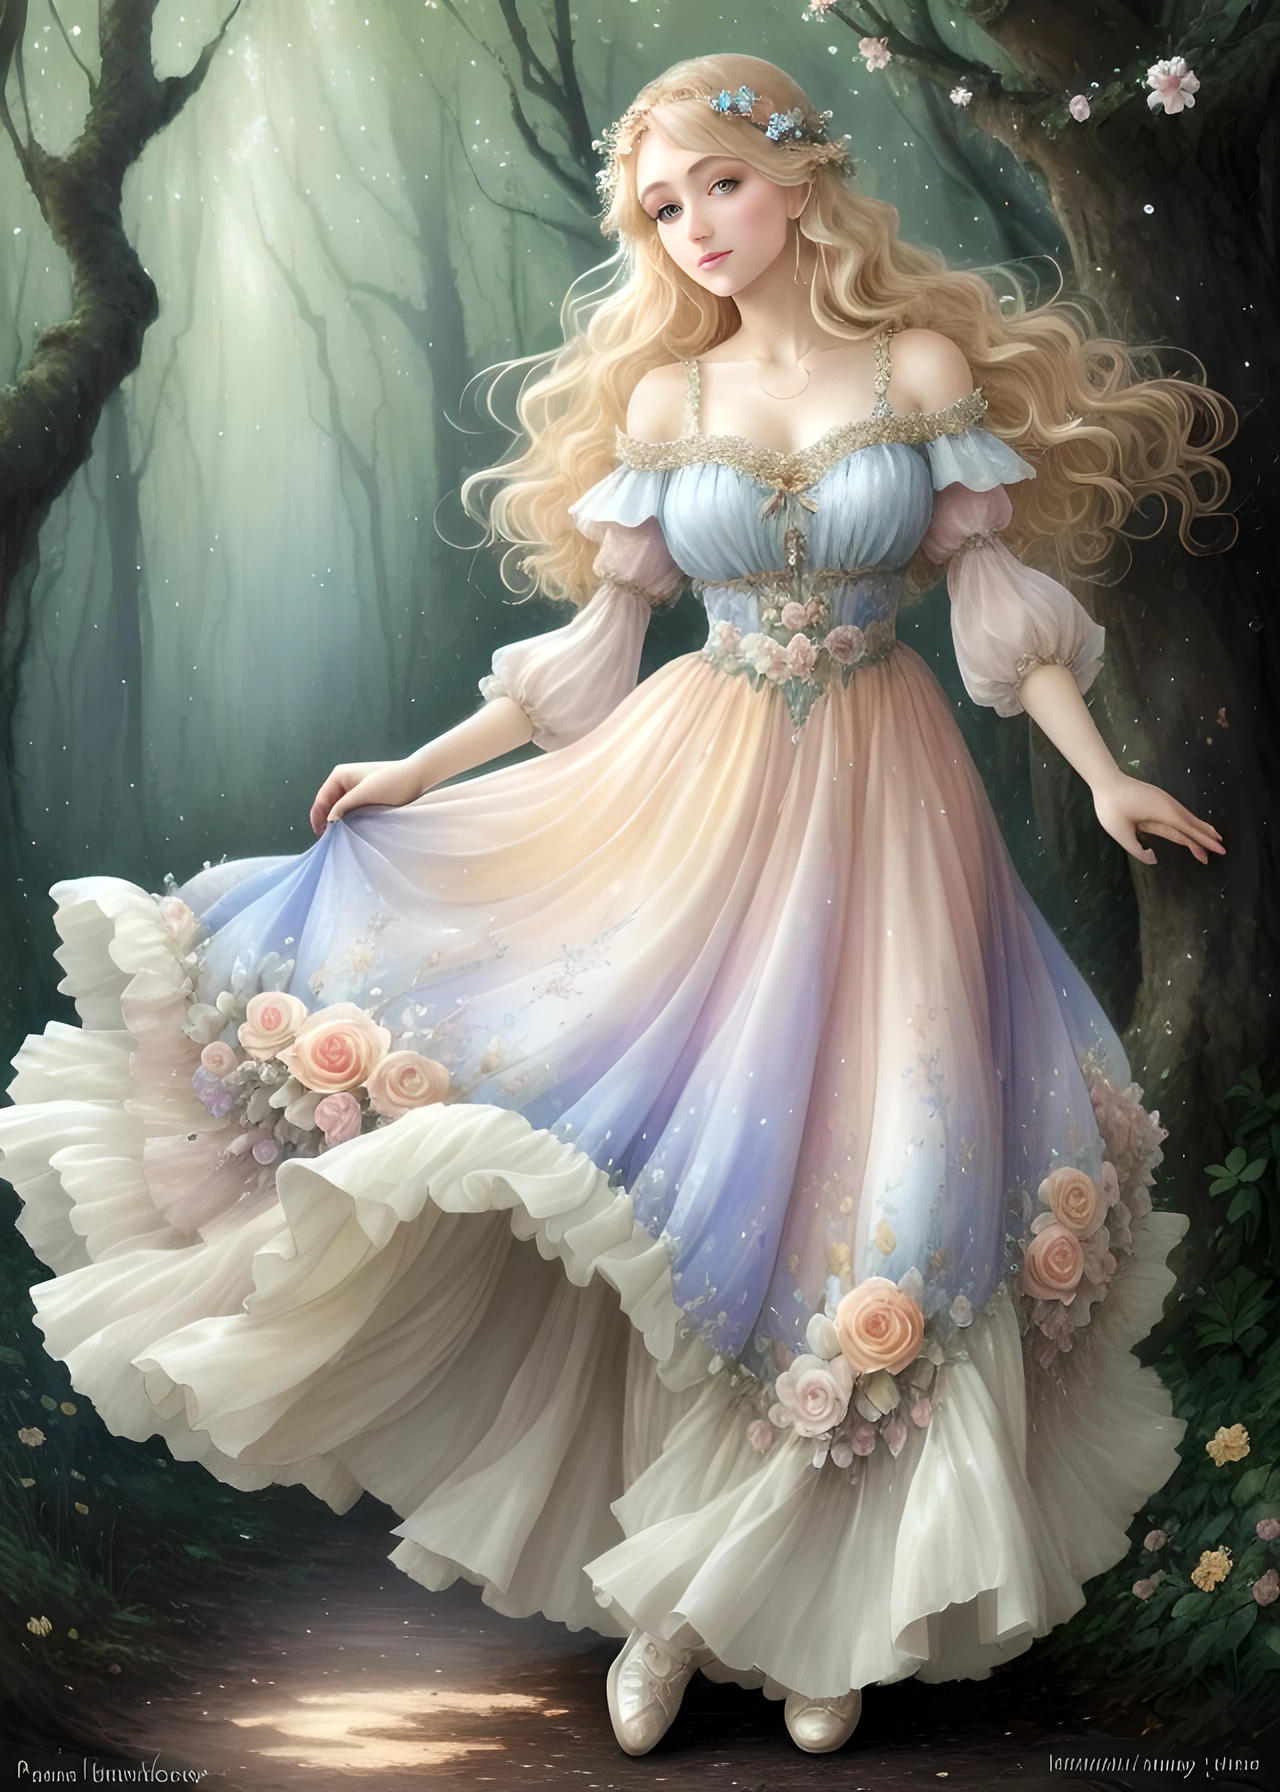 Fairydance 4 by LadyAly on DeviantArt